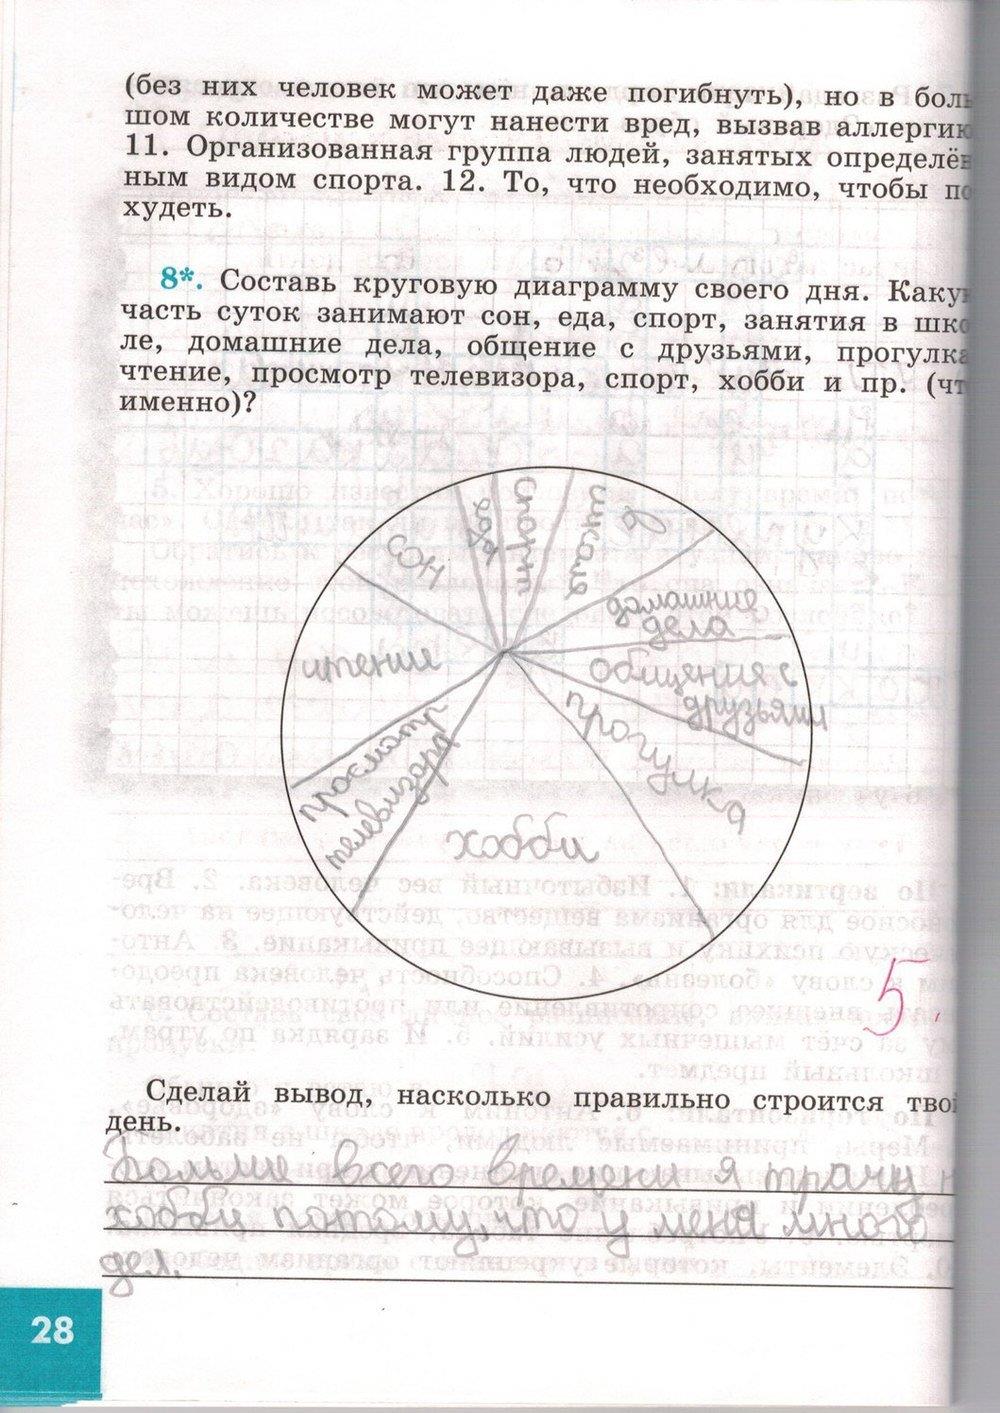 гдз 5 класс рабочая тетрадь страница 28 обществознание Иванова, Хотеенкова